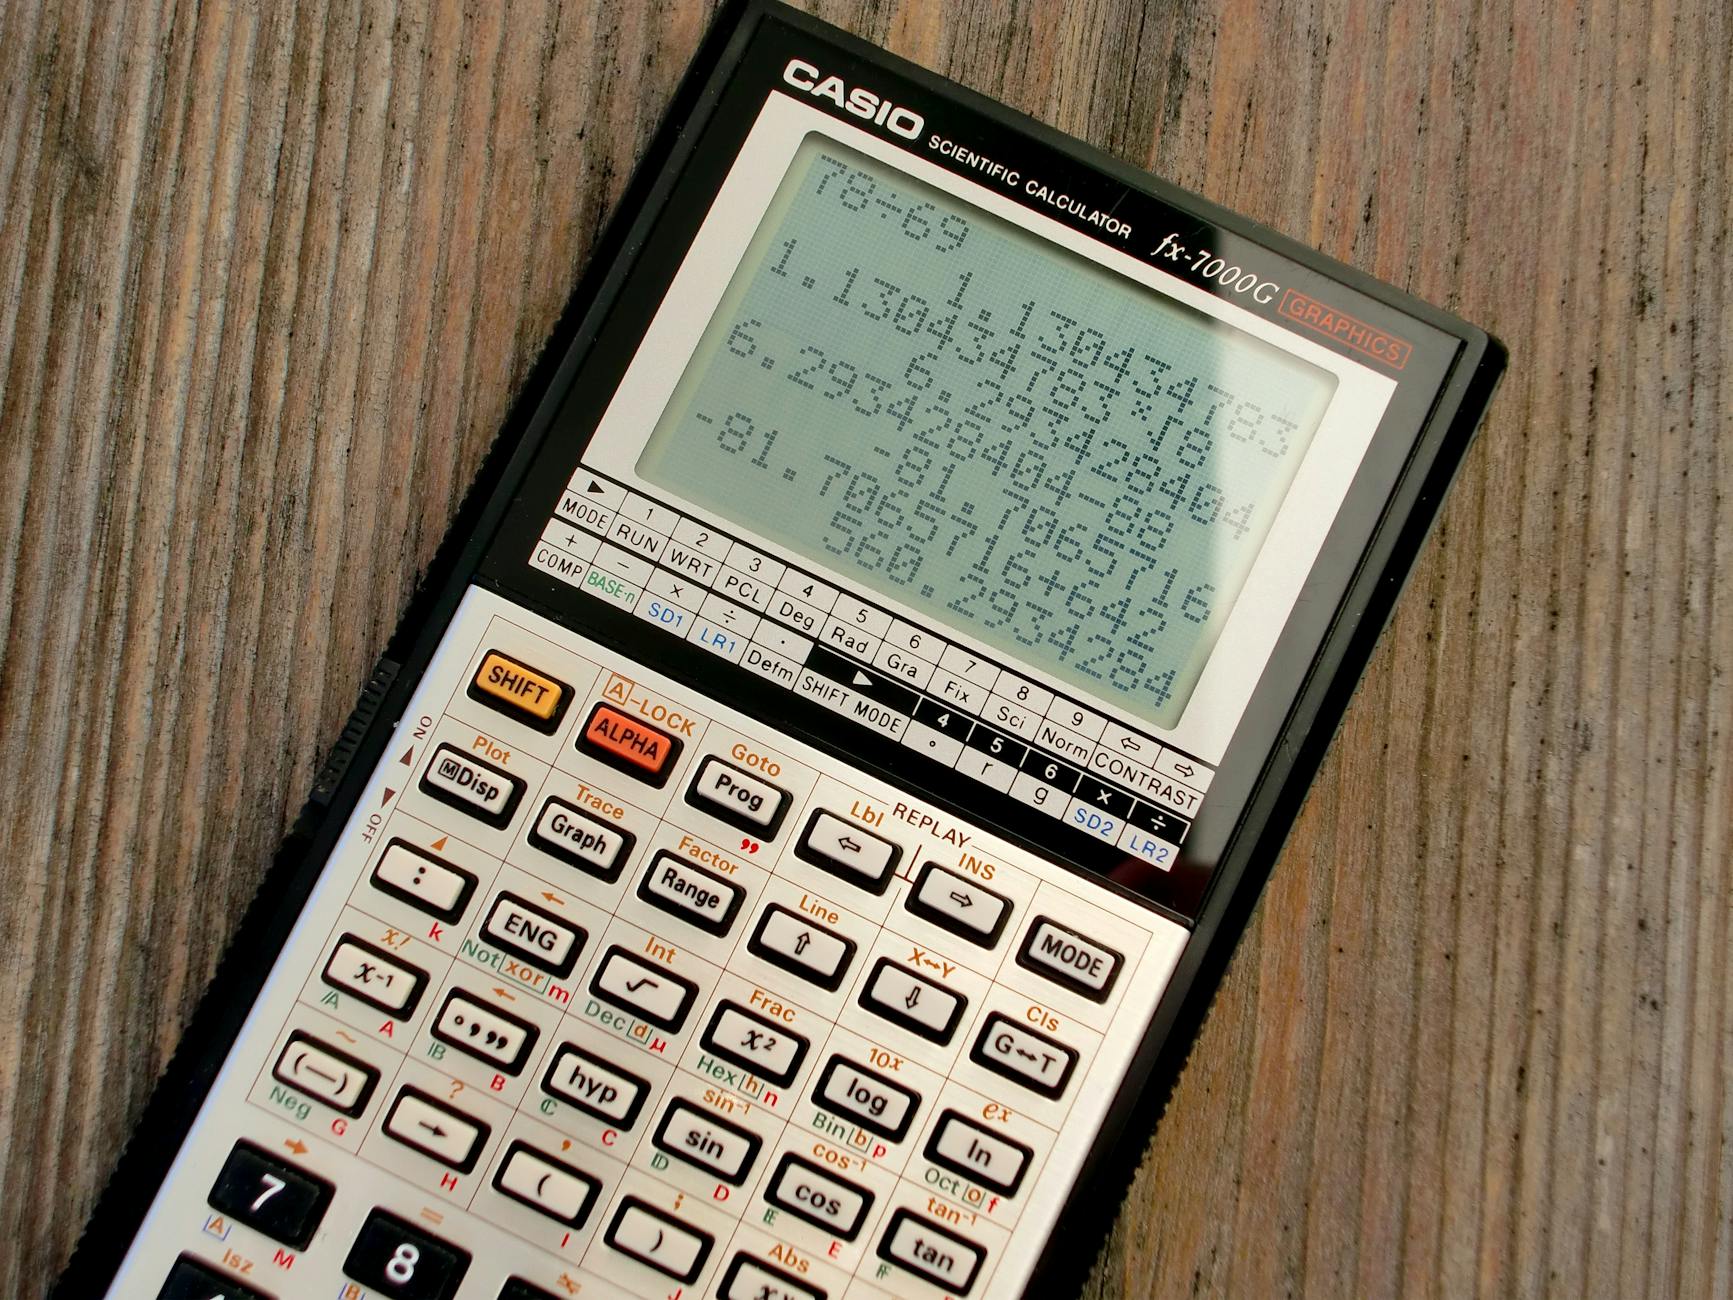 black-and-grey-casio-scientific-calculator-showing-formula-free-stock